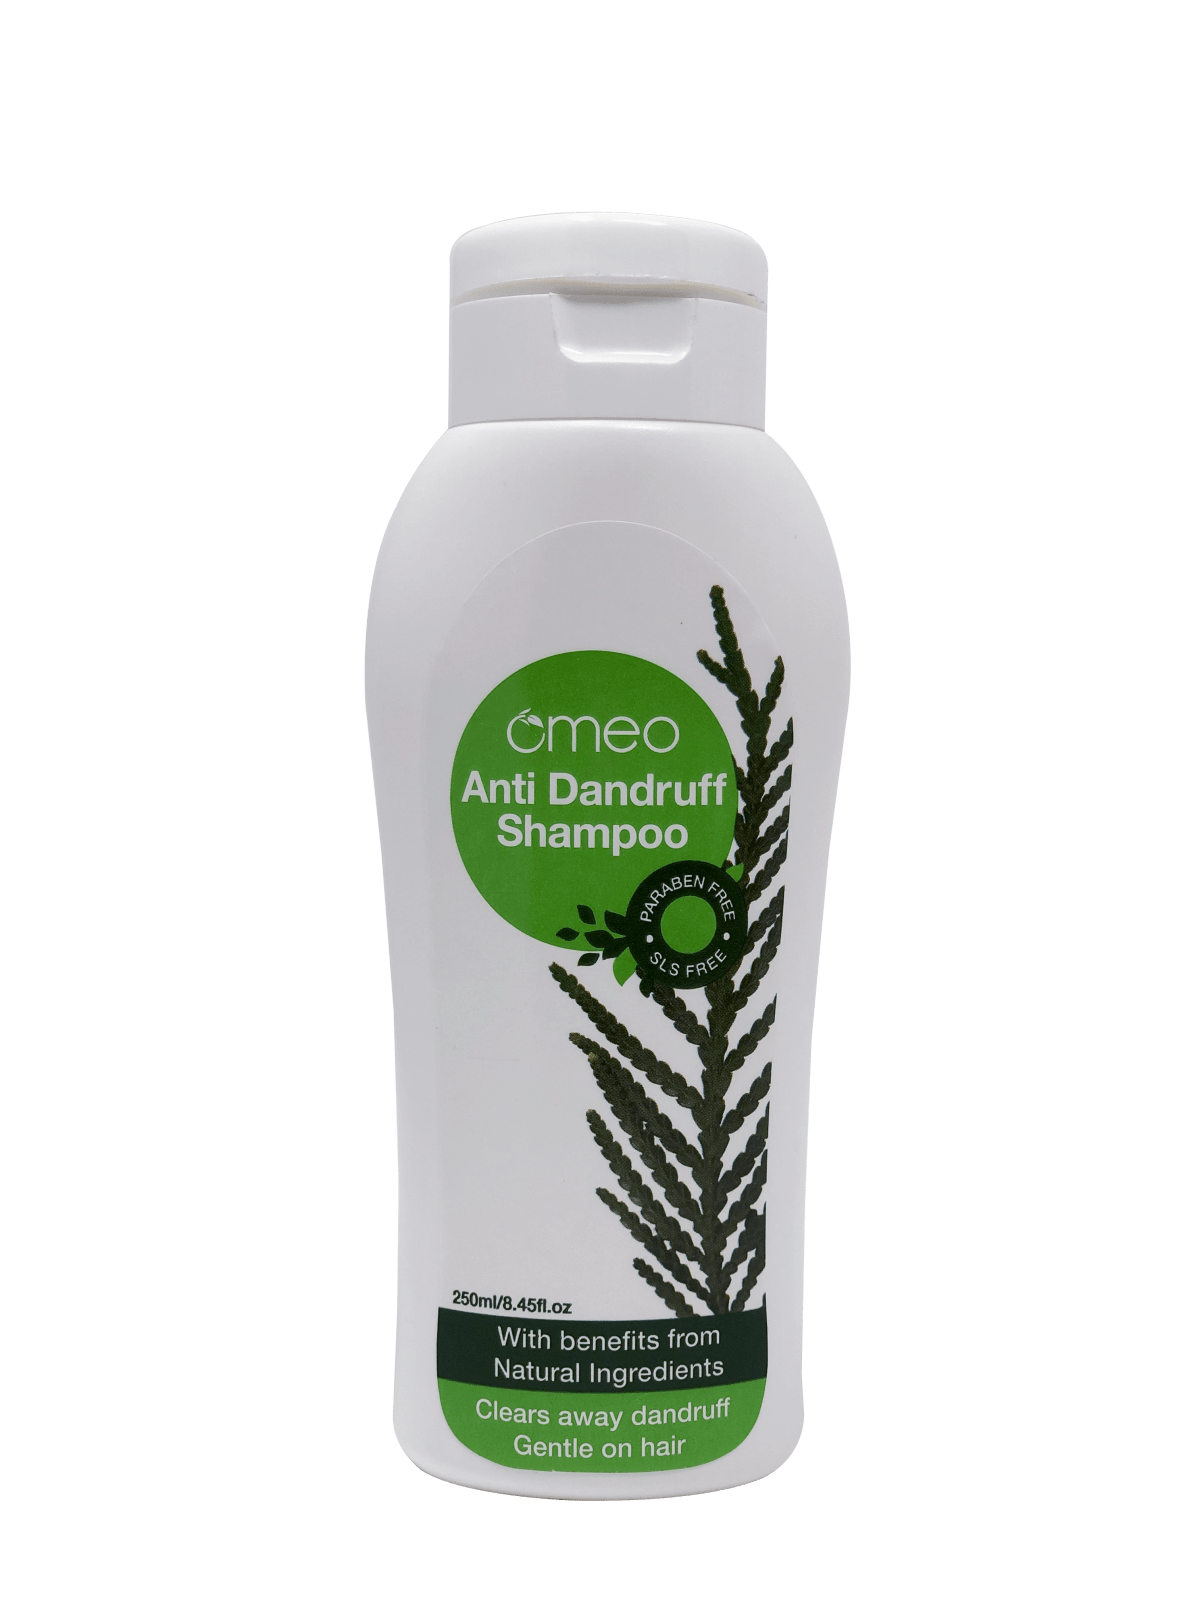 Omeo Anti Dandruff Shampoo